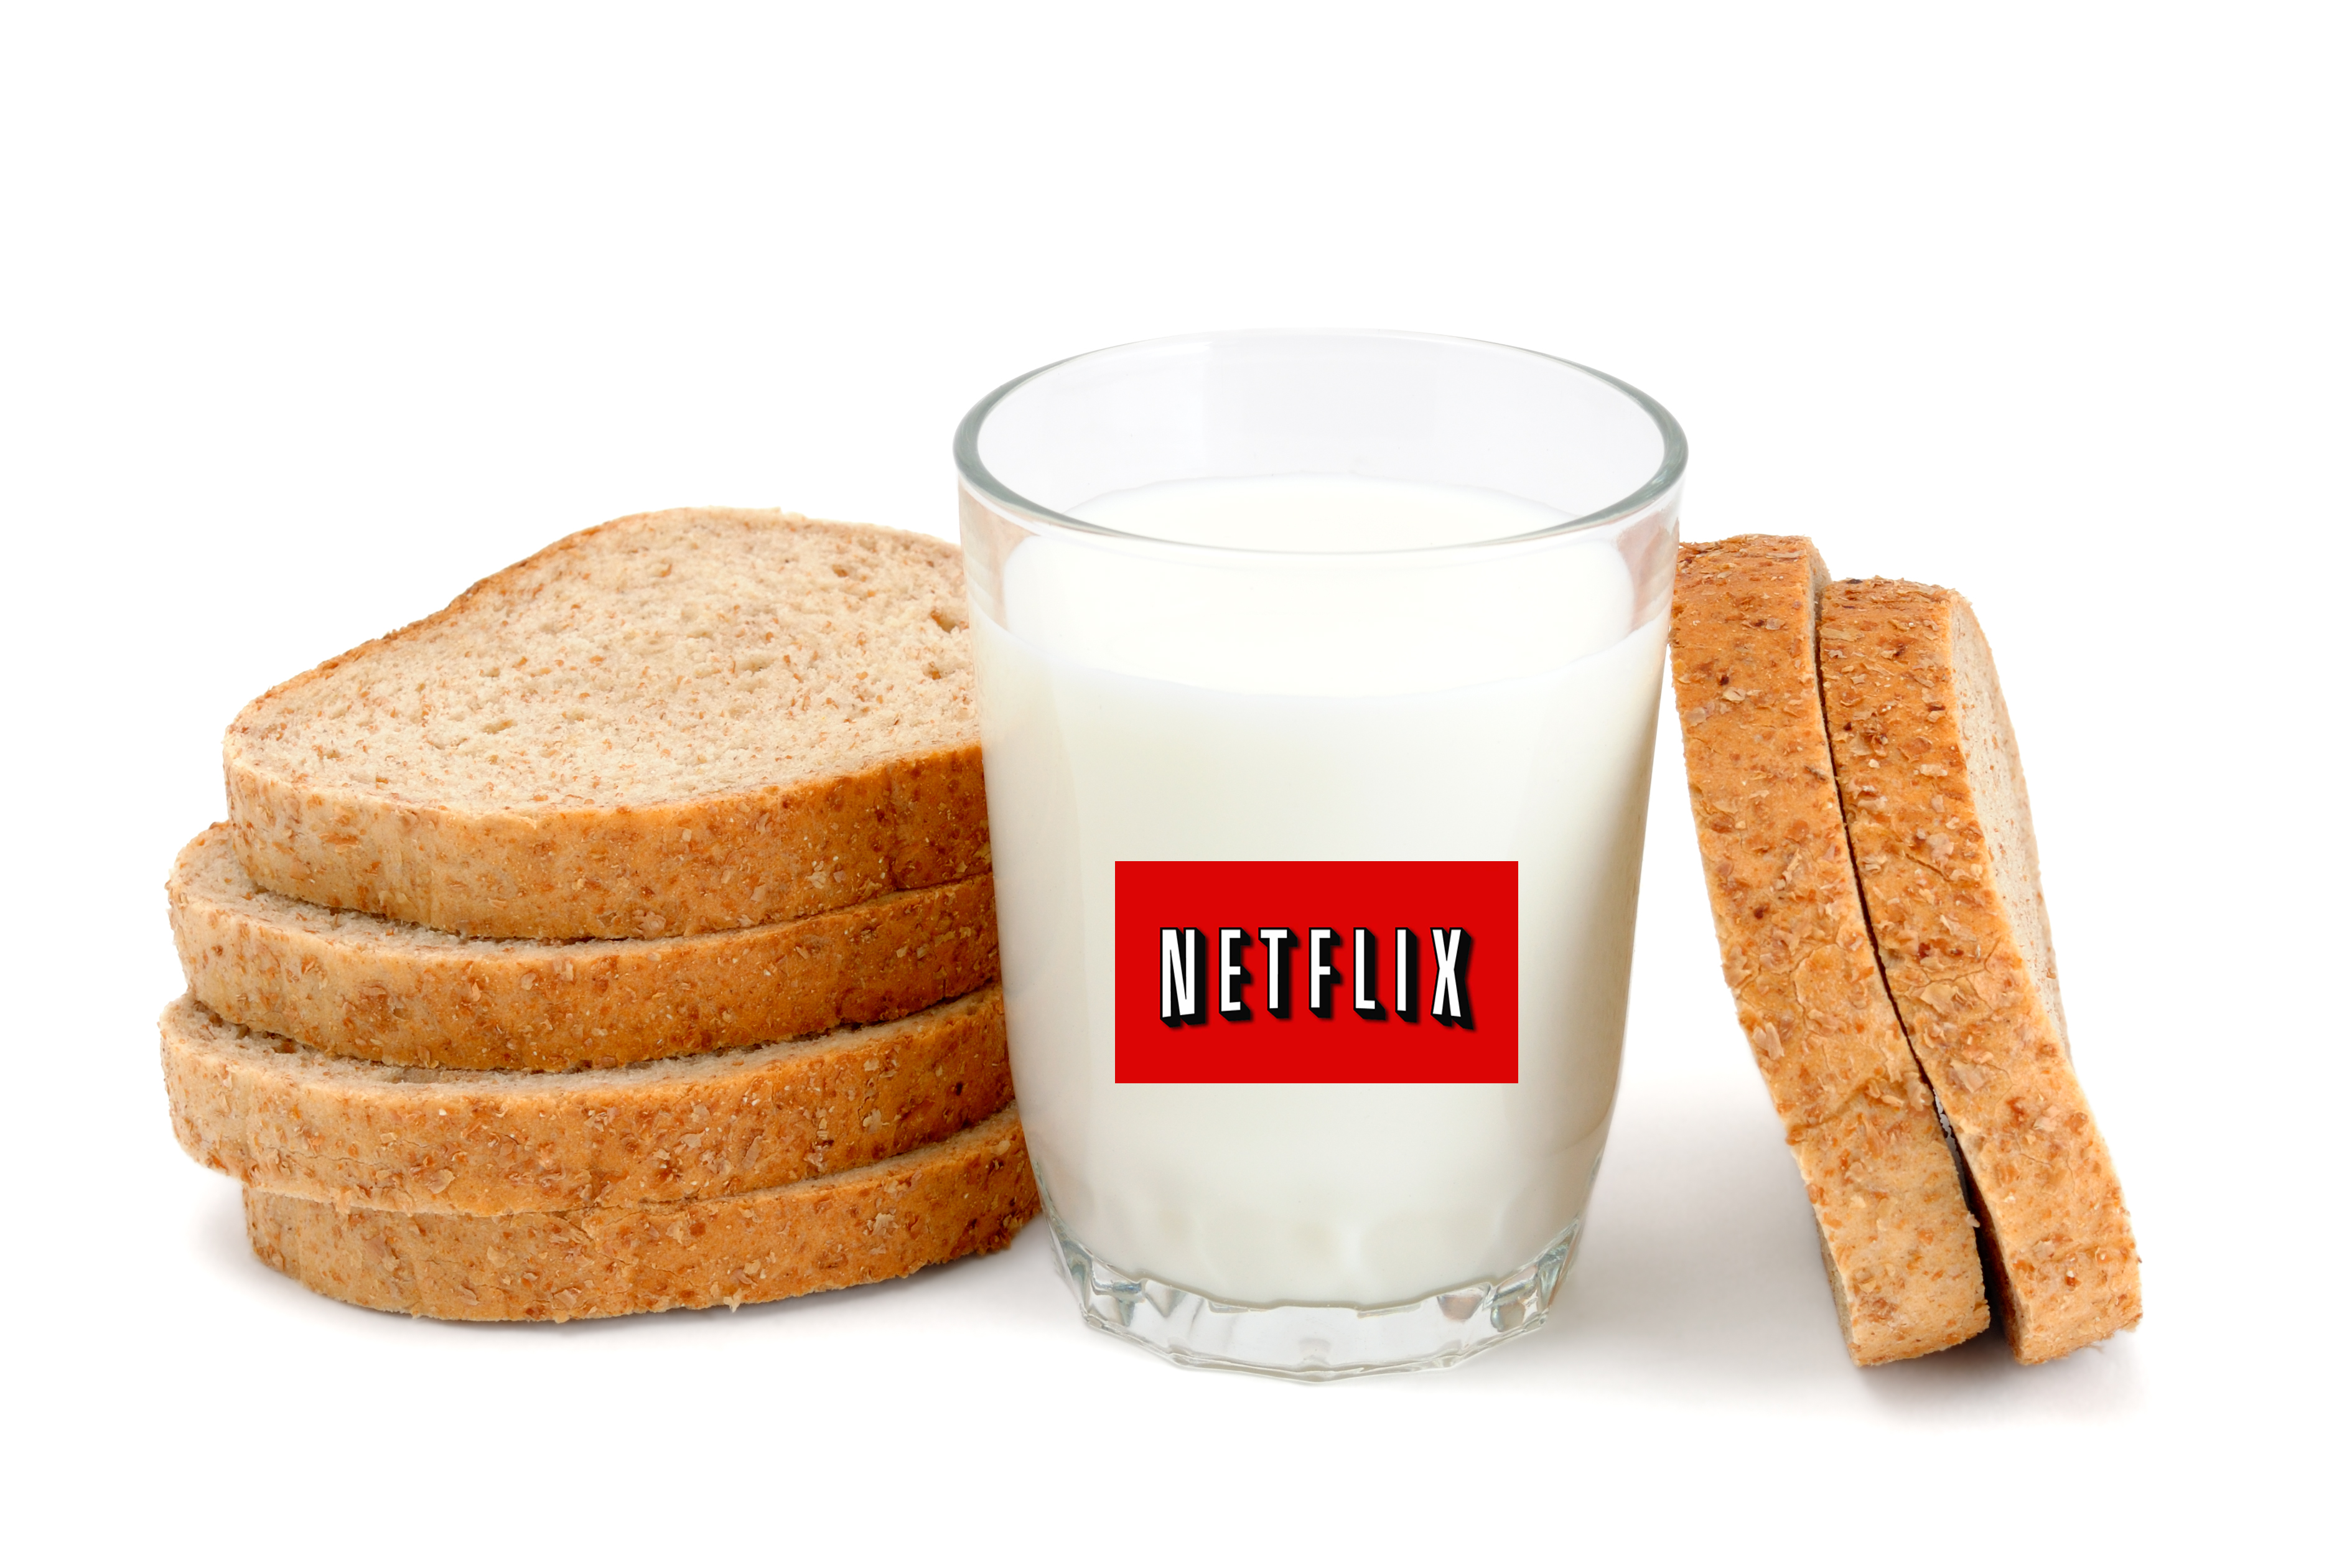 Milk, Bread, and Netflix